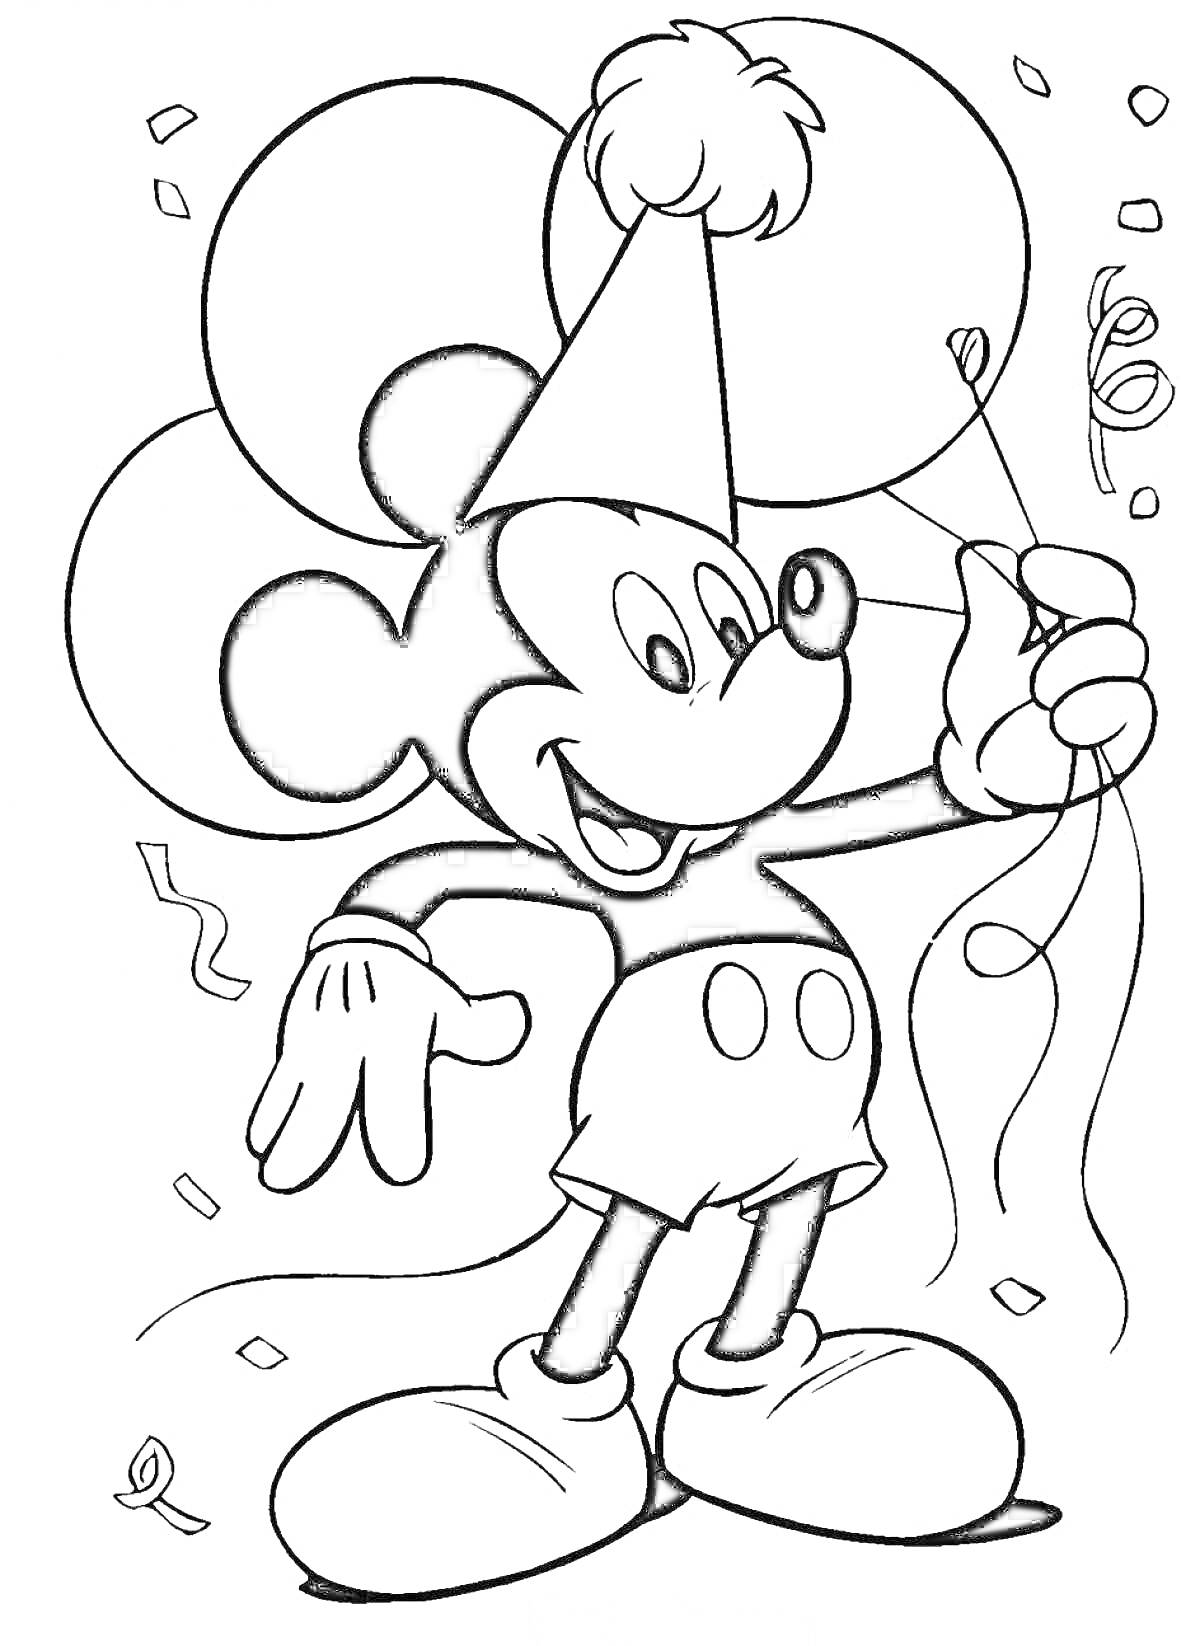 Раскраска Микки Маус в колпаке с шарами и серпантином